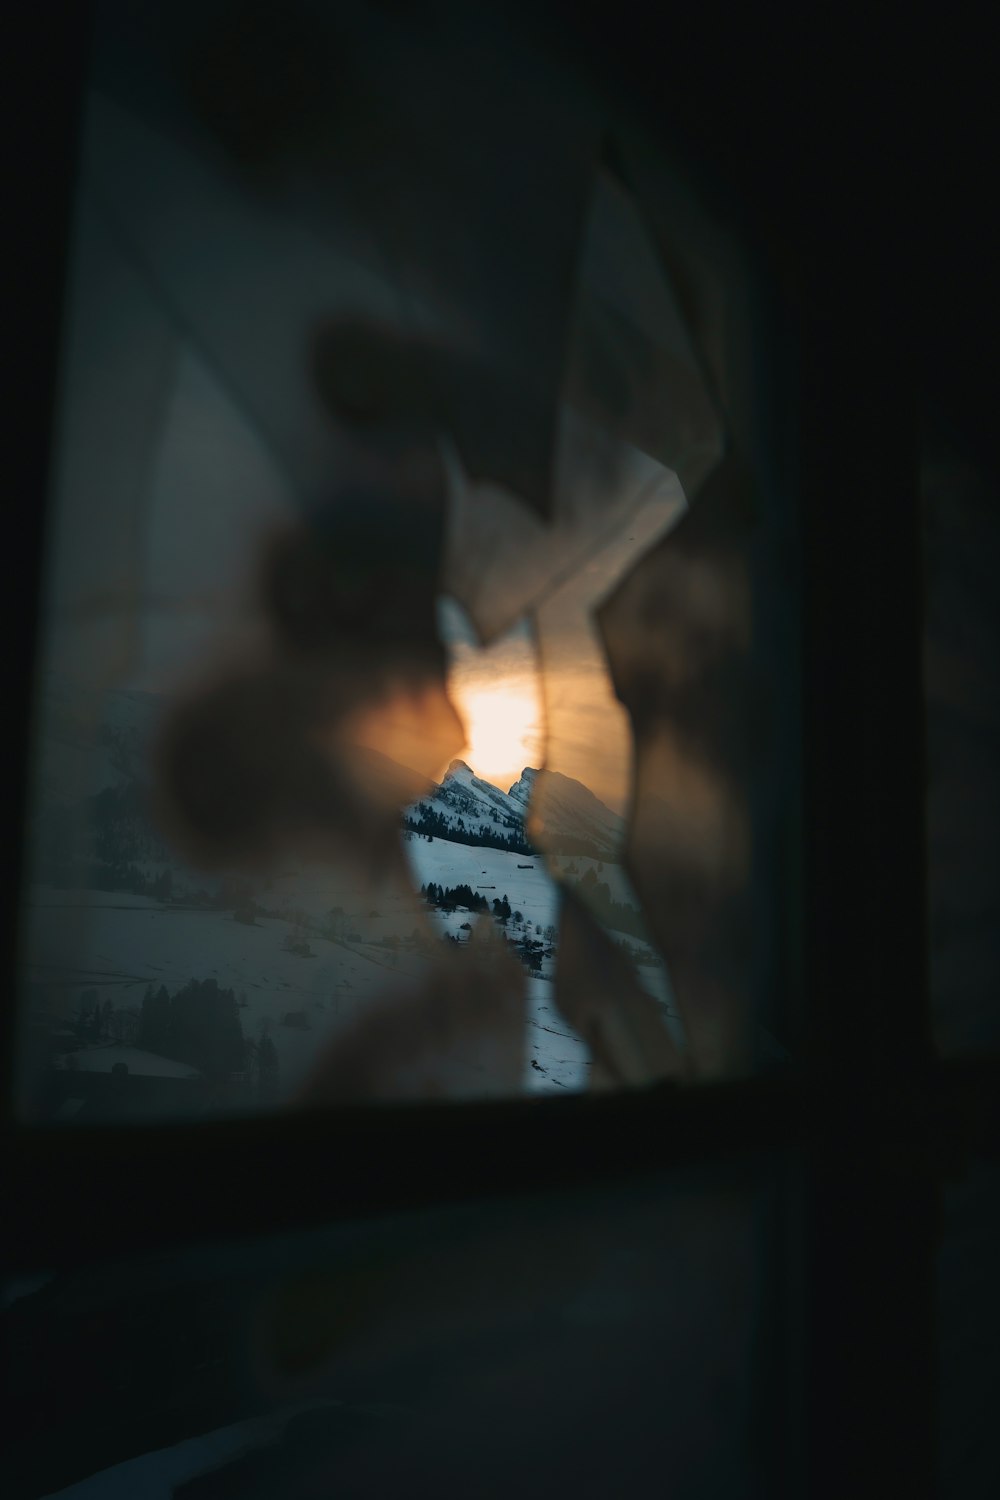 a blurry photo of a mountain seen through a window